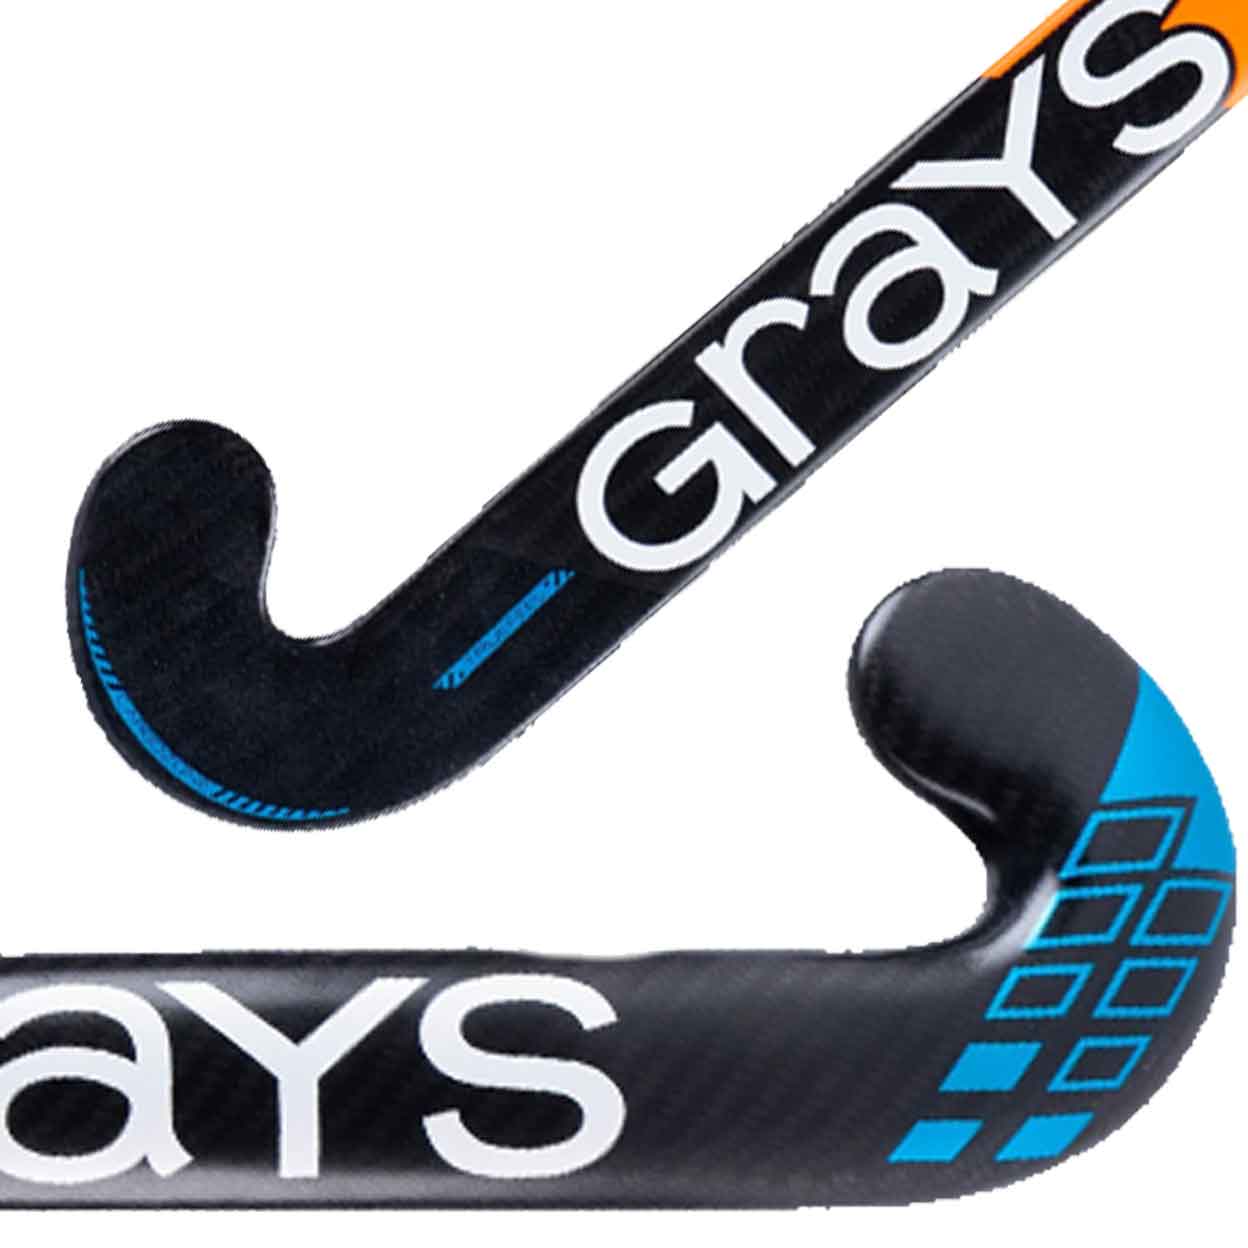 Grays GR5000 Jumbow Composite Field Hockey Stick